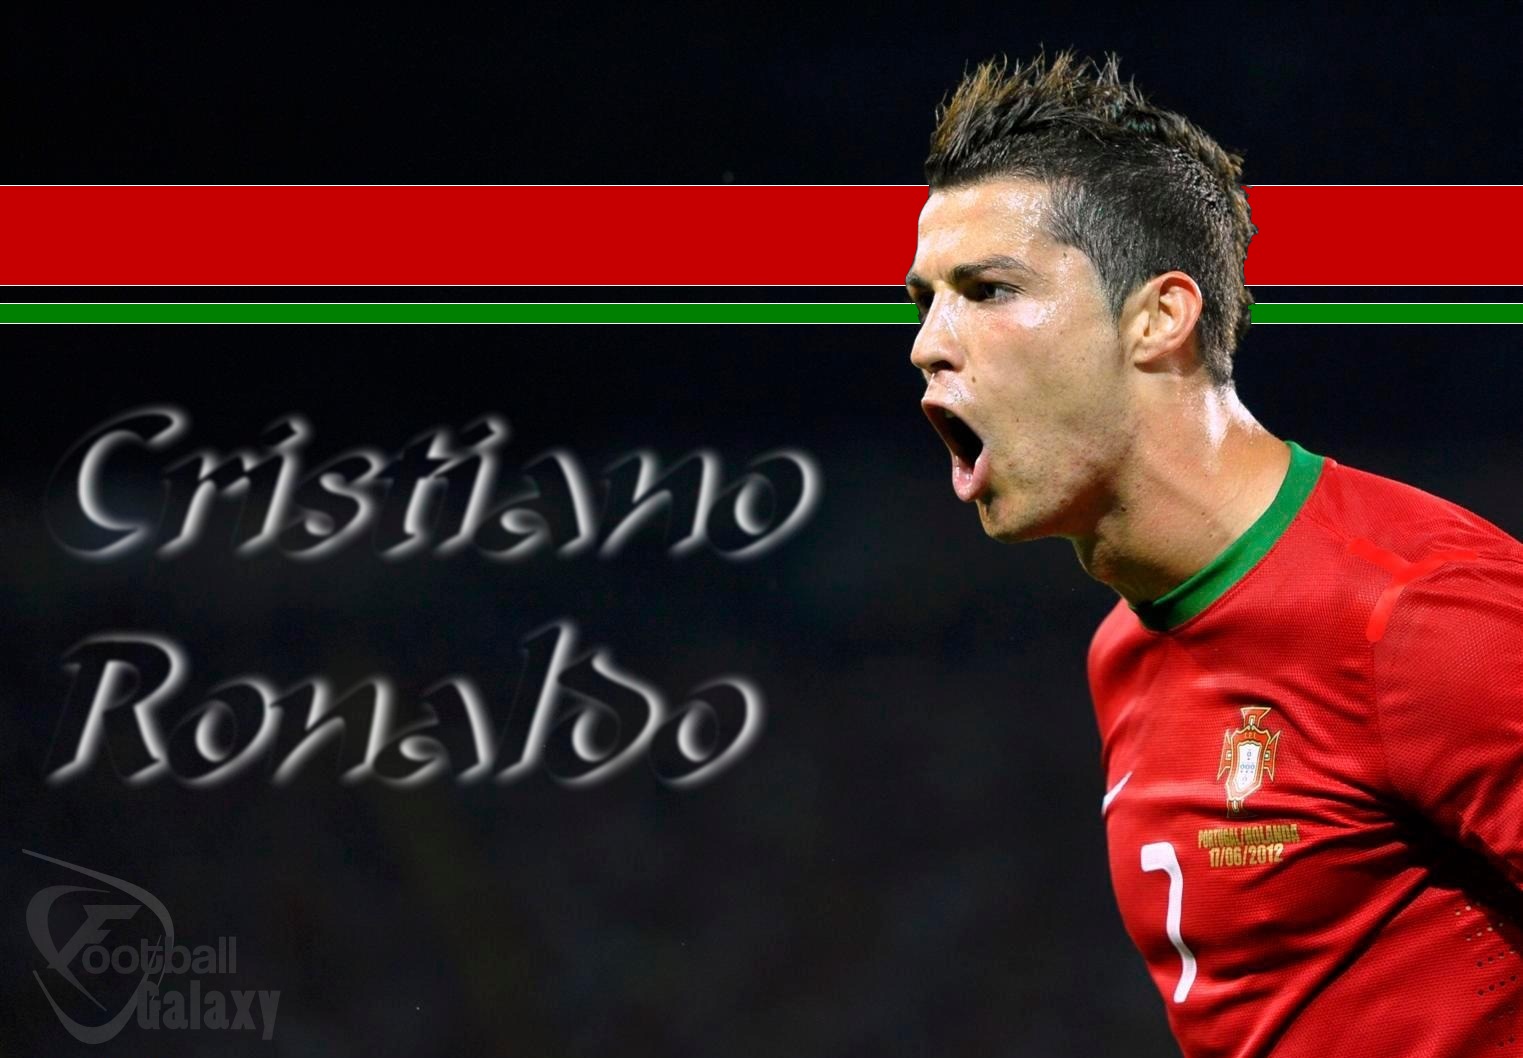 http://3.bp.blogspot.com/-ERAcBcYzkNs/UPwCuCW9HNI/AAAAAAAAPYo/ISBr7klgaVo/s1600/Cristiano-Ronaldo-2013-HD-Wallpaper-Picture-Portugal-Footballgalaxy.png